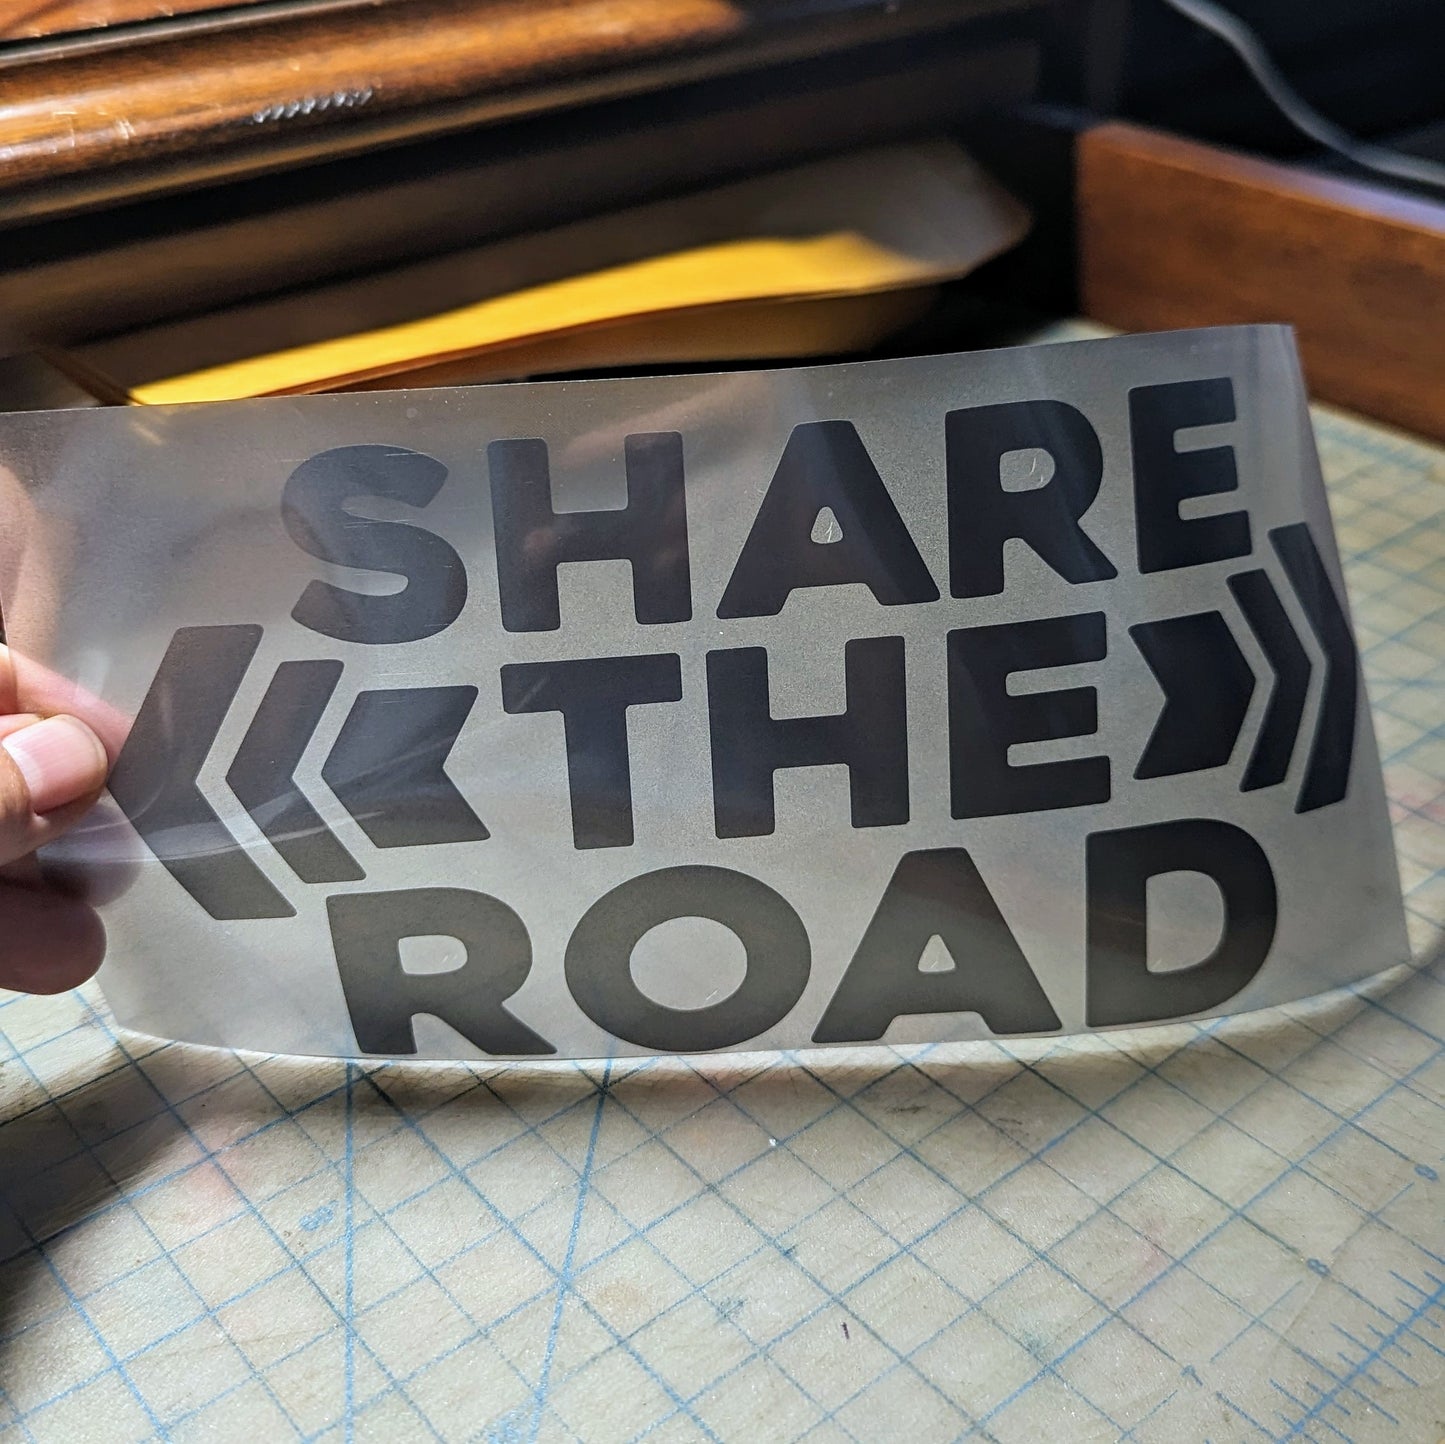 "Share The Road" Iron on reflective vinyl sheet